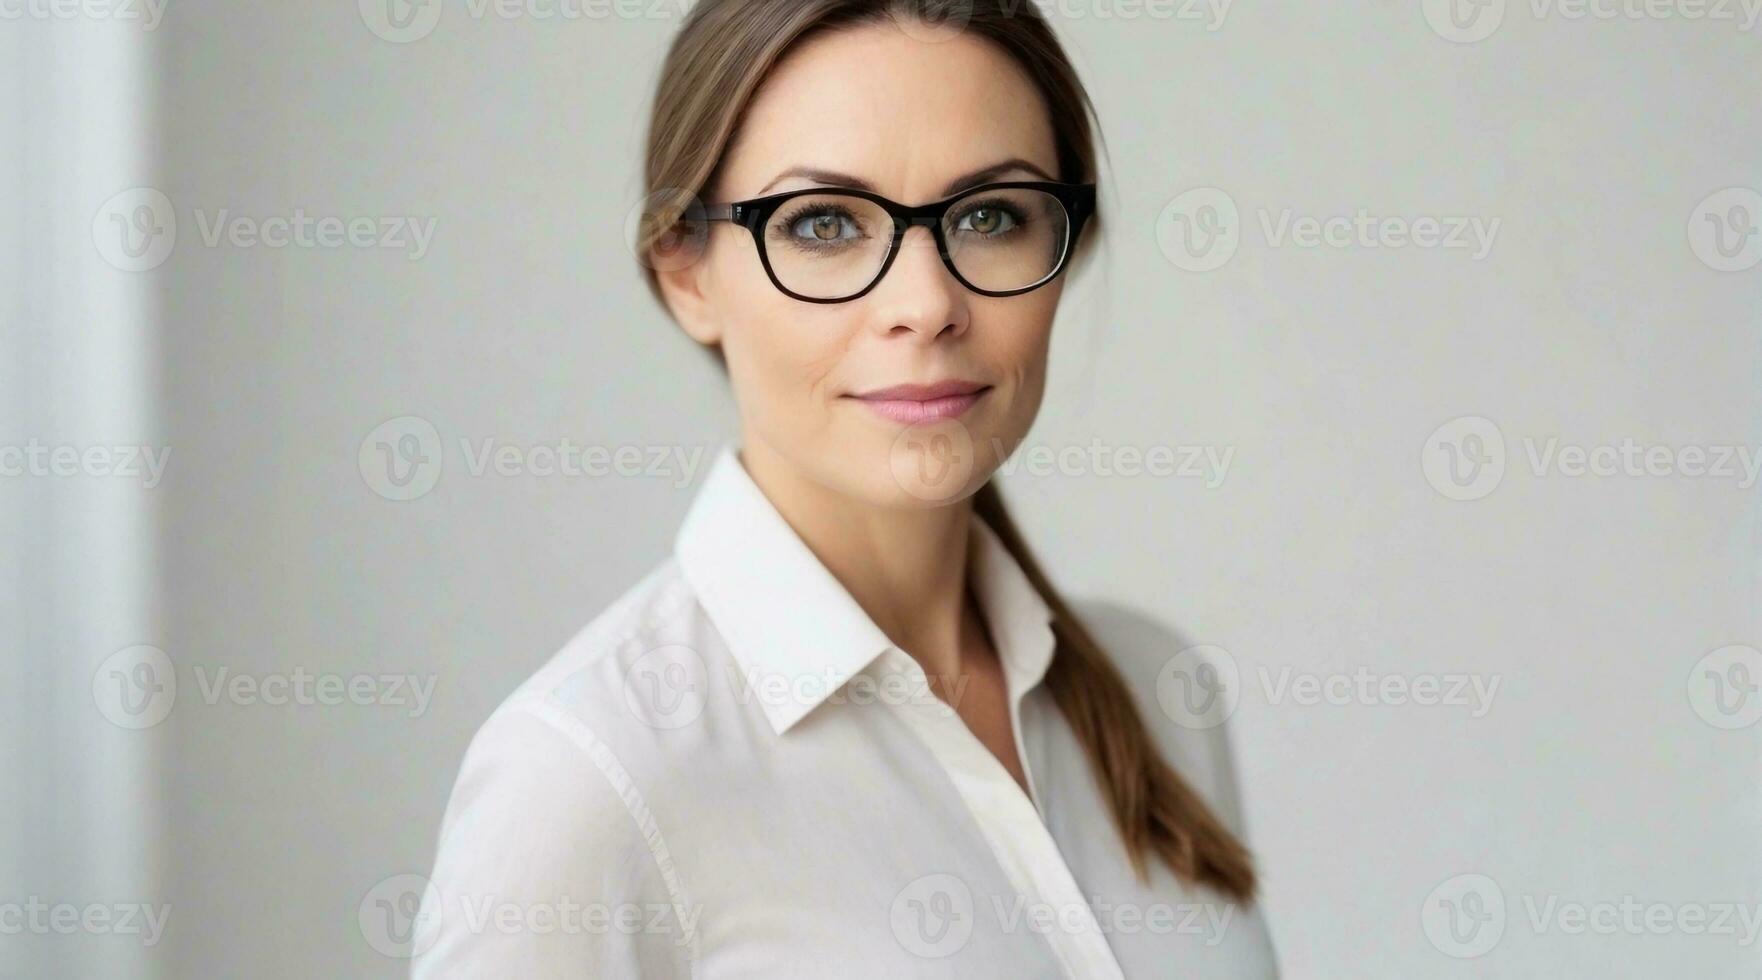 hermosa hembra profesor vistiendo lentes en contra blanco antecedentes con espacio para texto, antecedentes imagen, ai generado foto